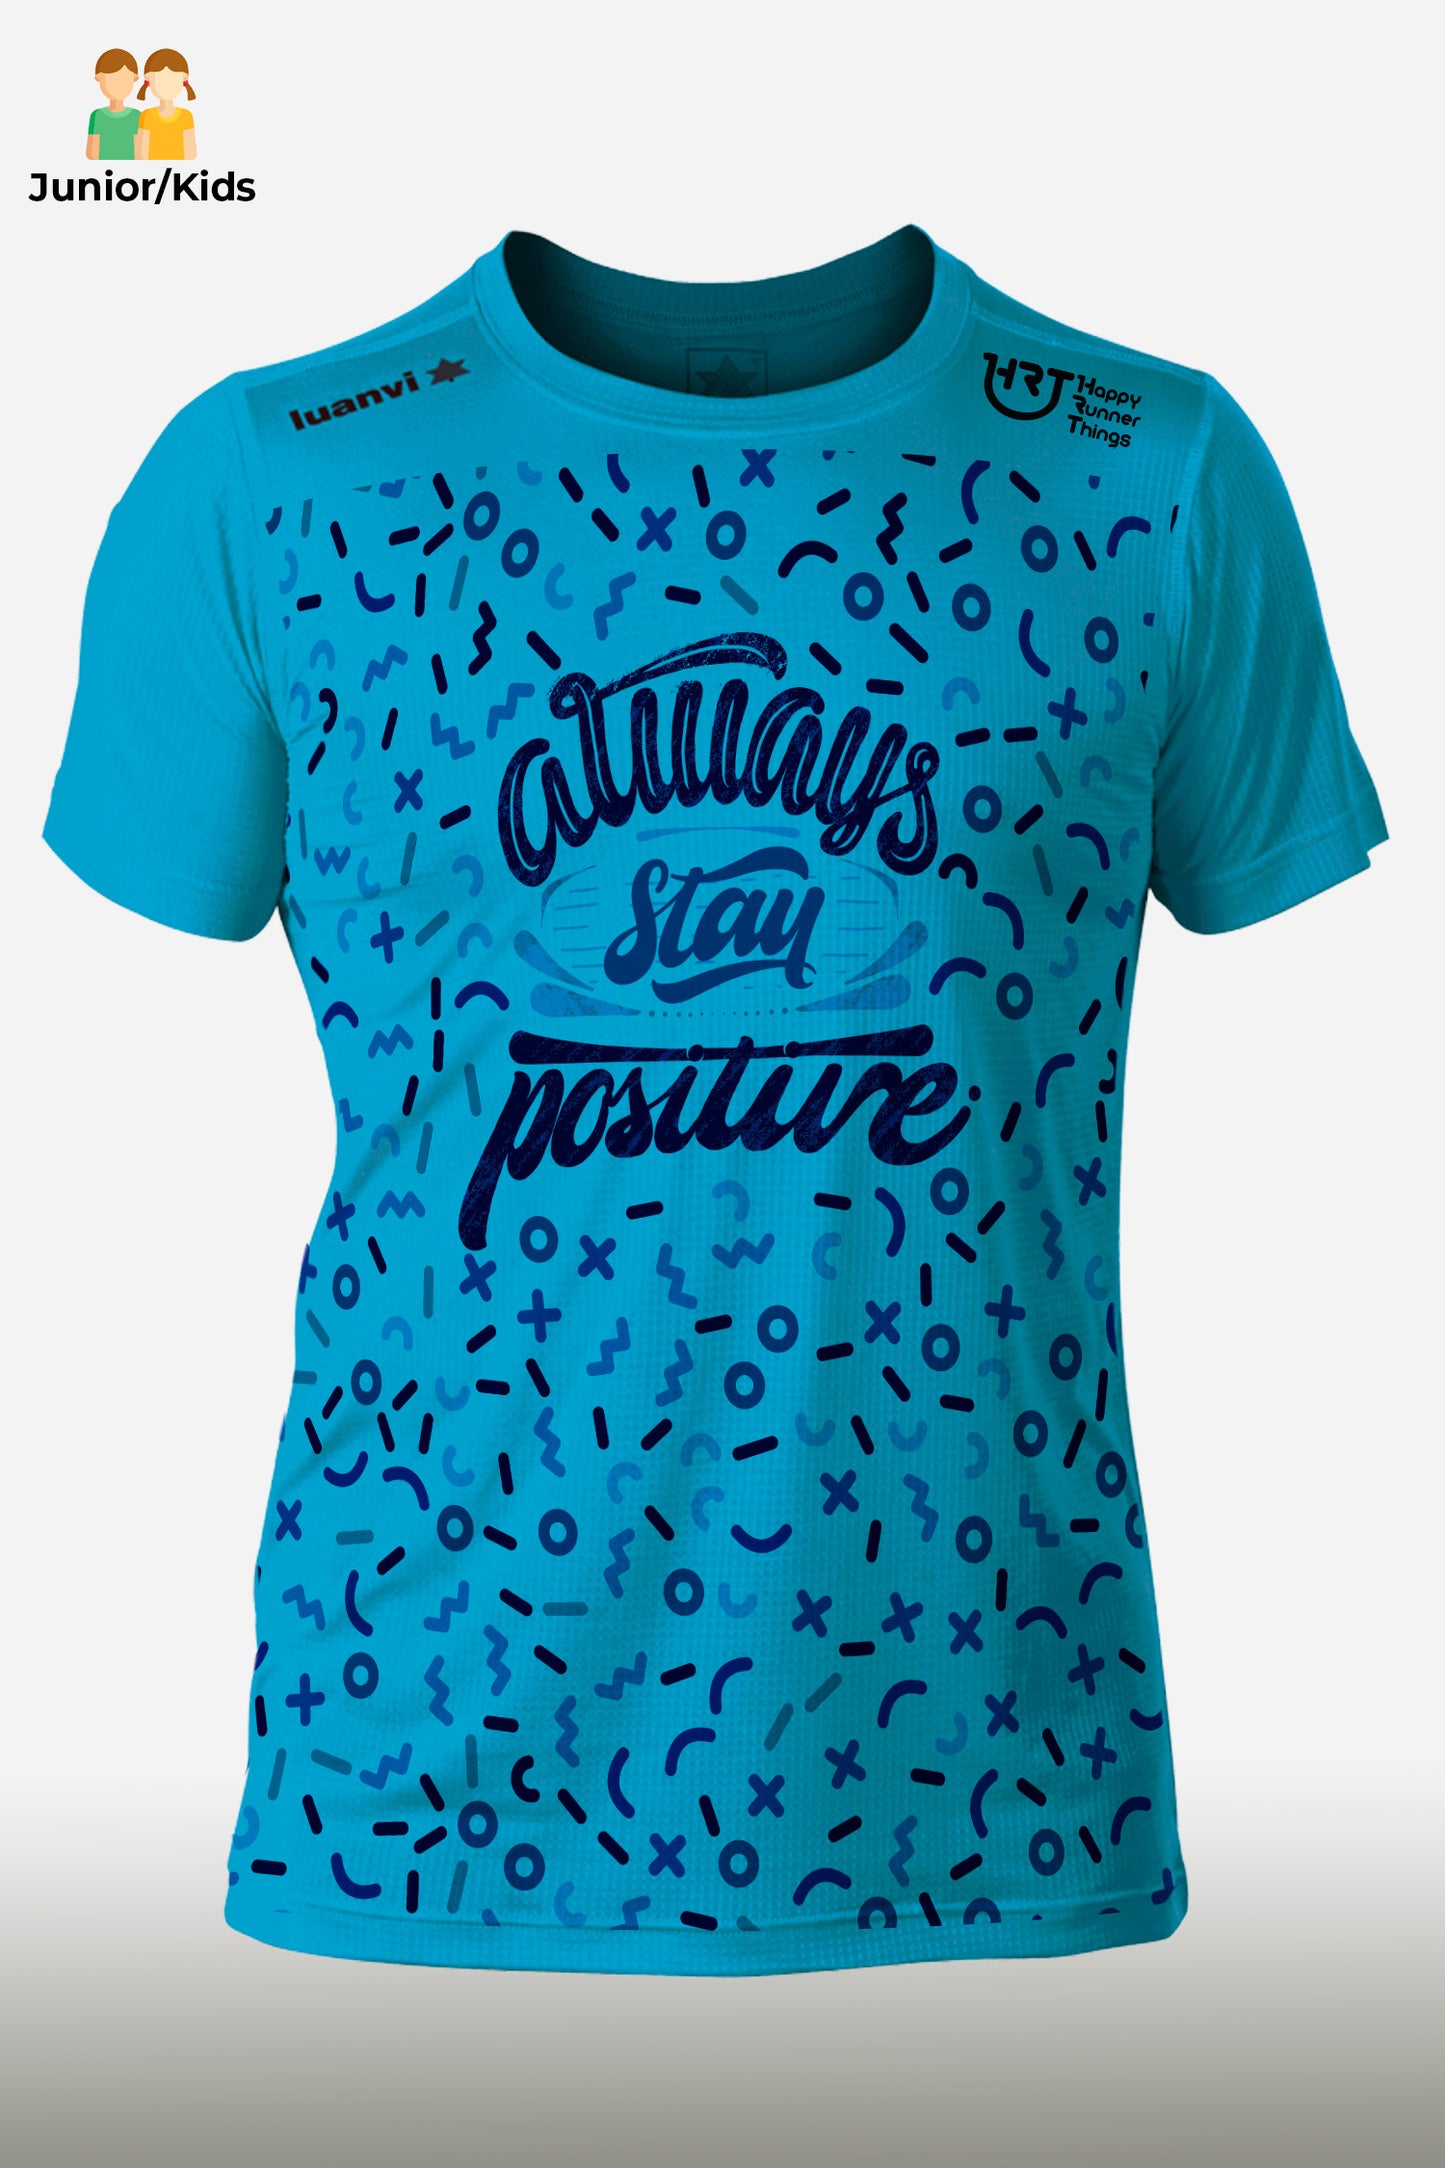 Always Positive - Camiseta Running Junior/Kids